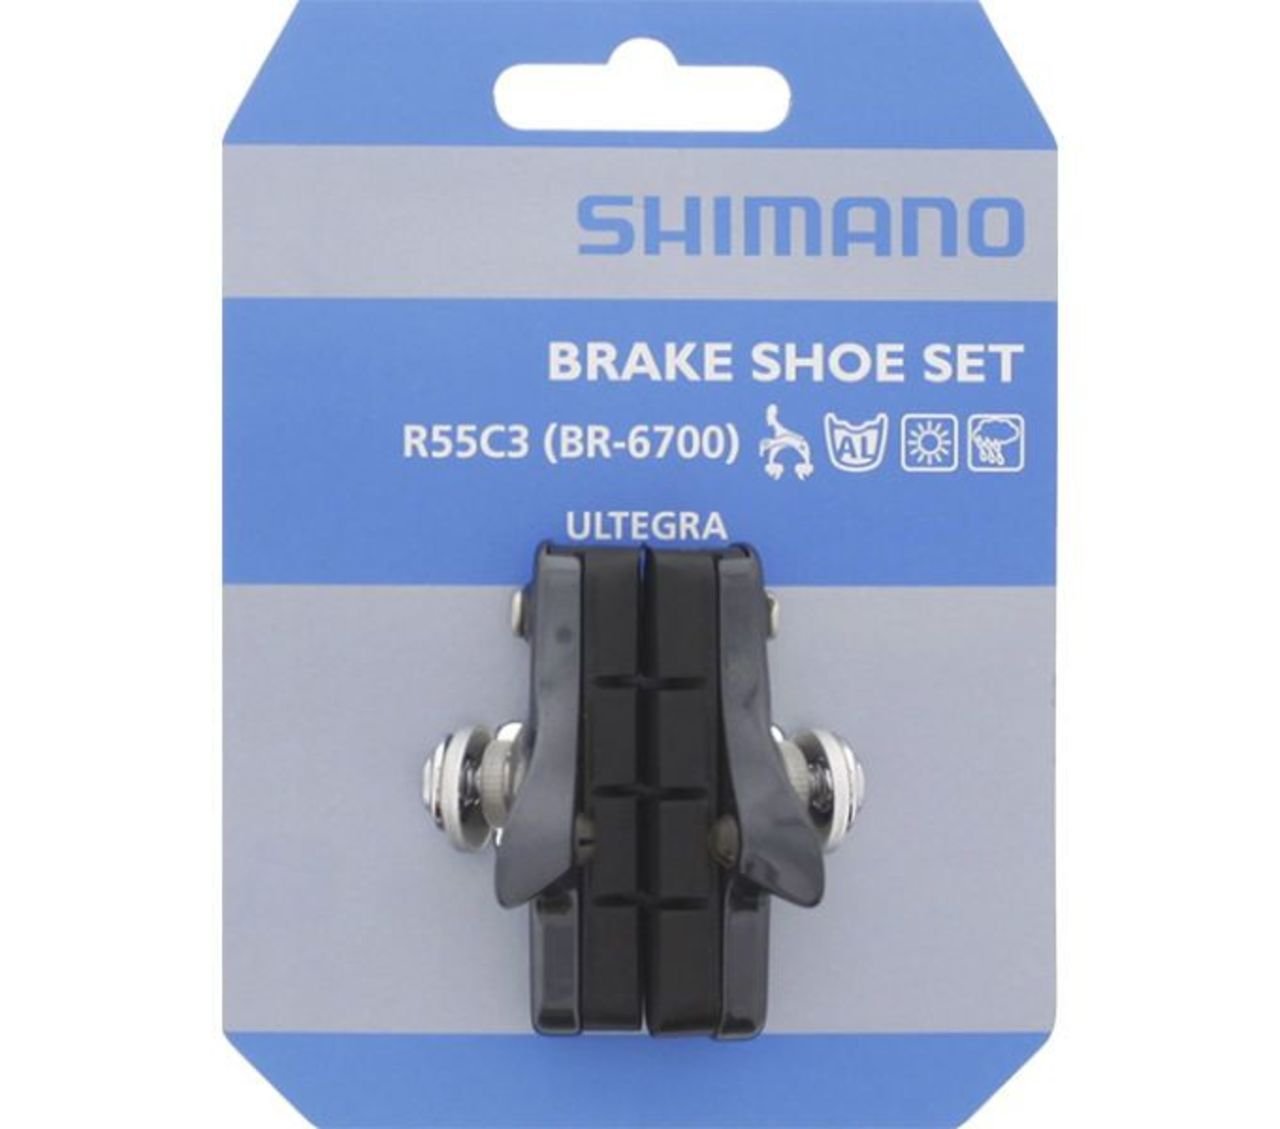 Тормозные колодки Shimano, brake pad, R55C3, Cartridge, for BR-6700, for aluminium rim, 1 pair, A154773 тормозные колодки велосипедные shimano brake pad r55c for ceramic rims dura ace ultegra a116833